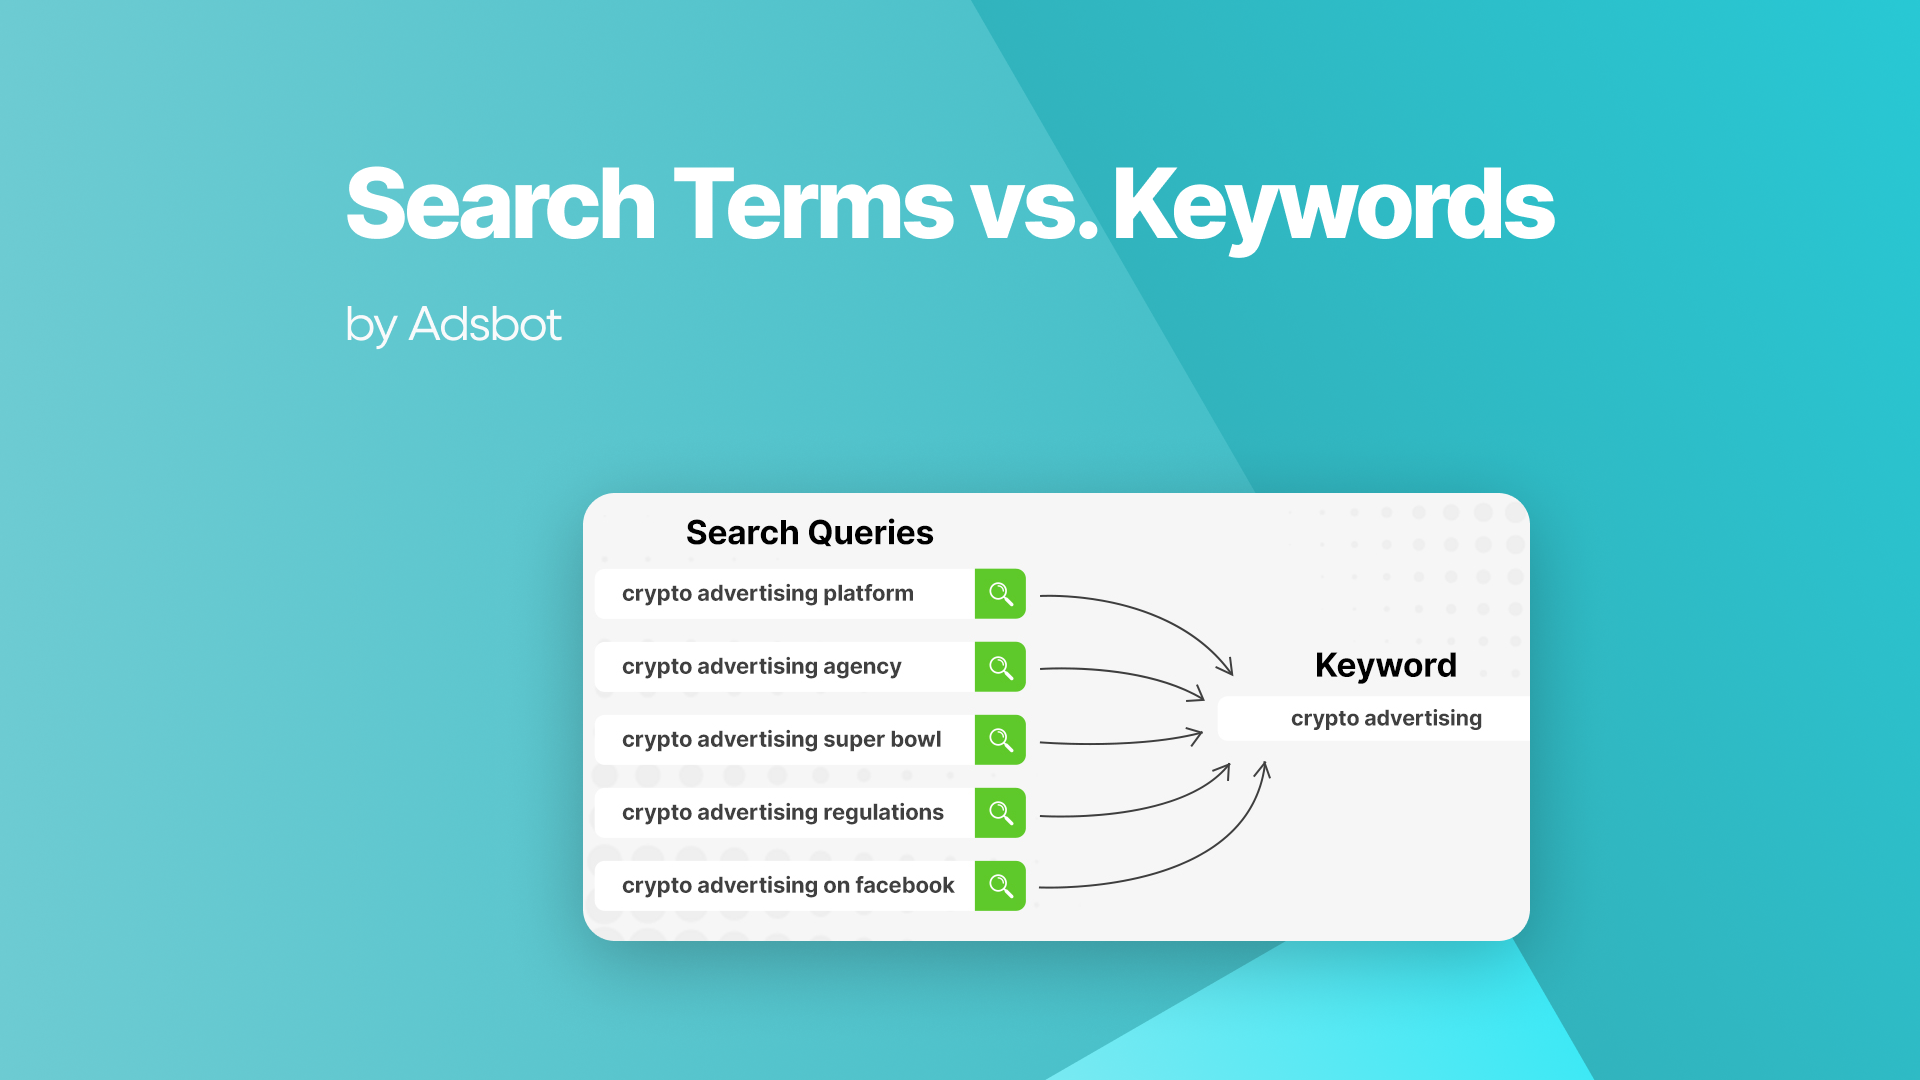 Search Terms vs. Keywords